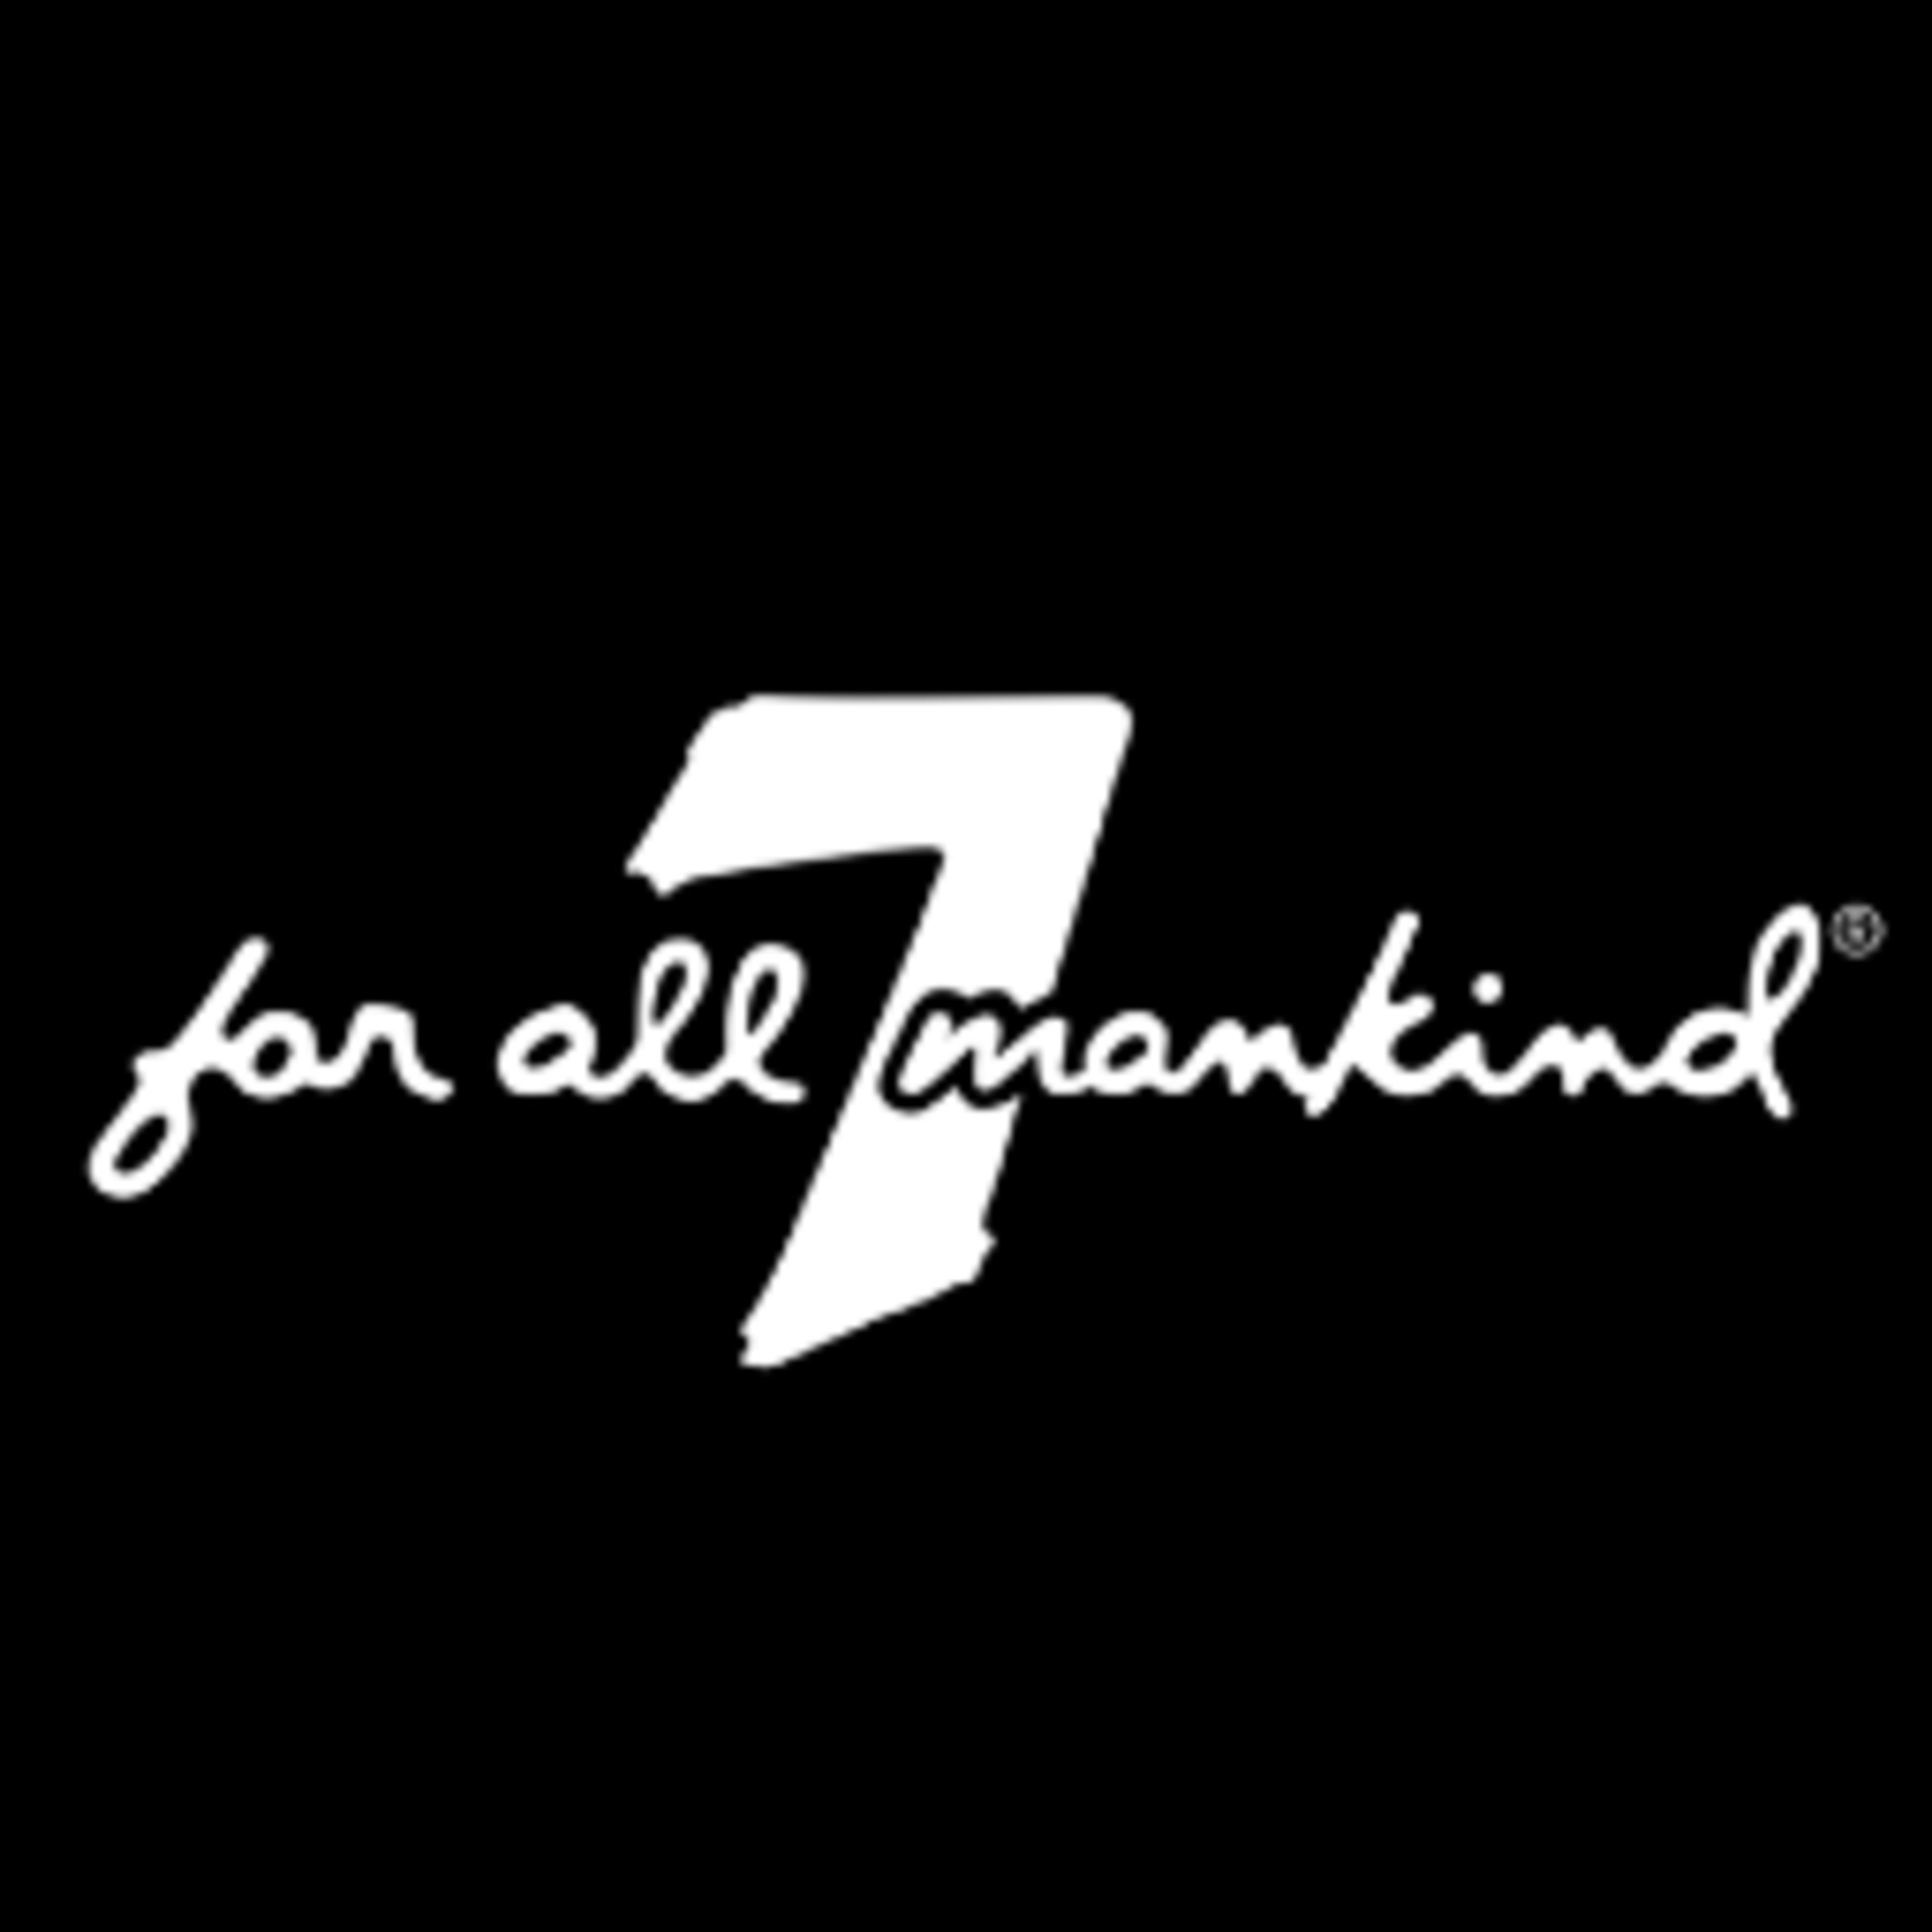 7 For All MankindCode